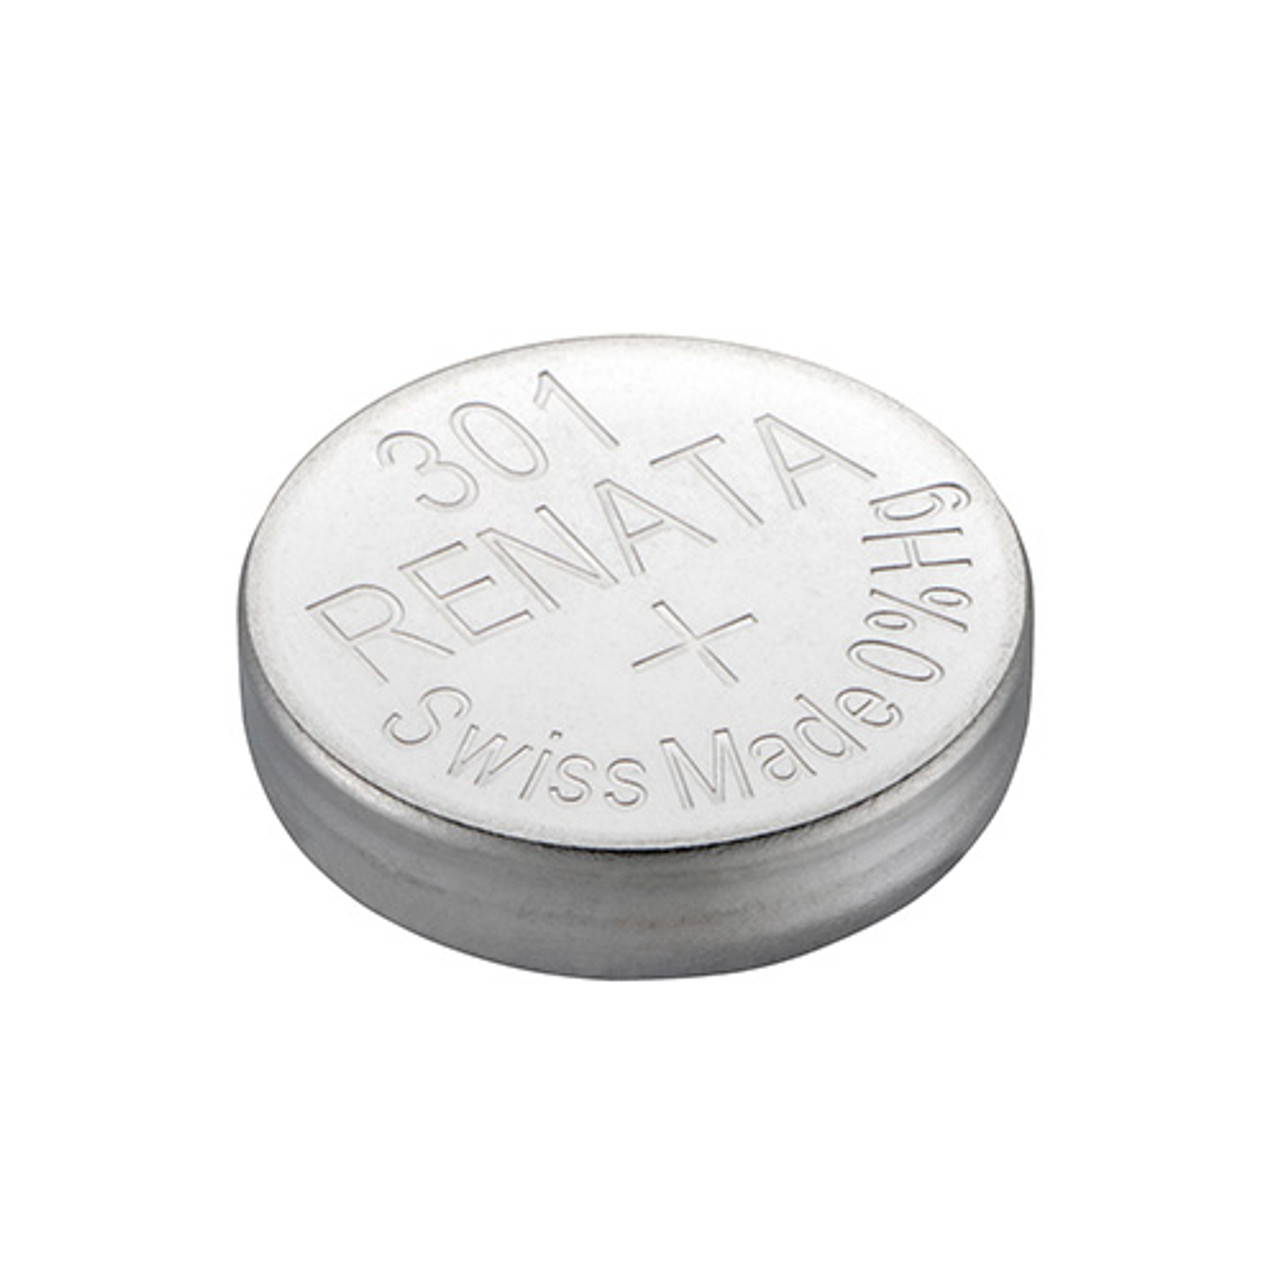 Renata Mercury Free Silver Oxide Batteries  - 365  (Pkg of 5)